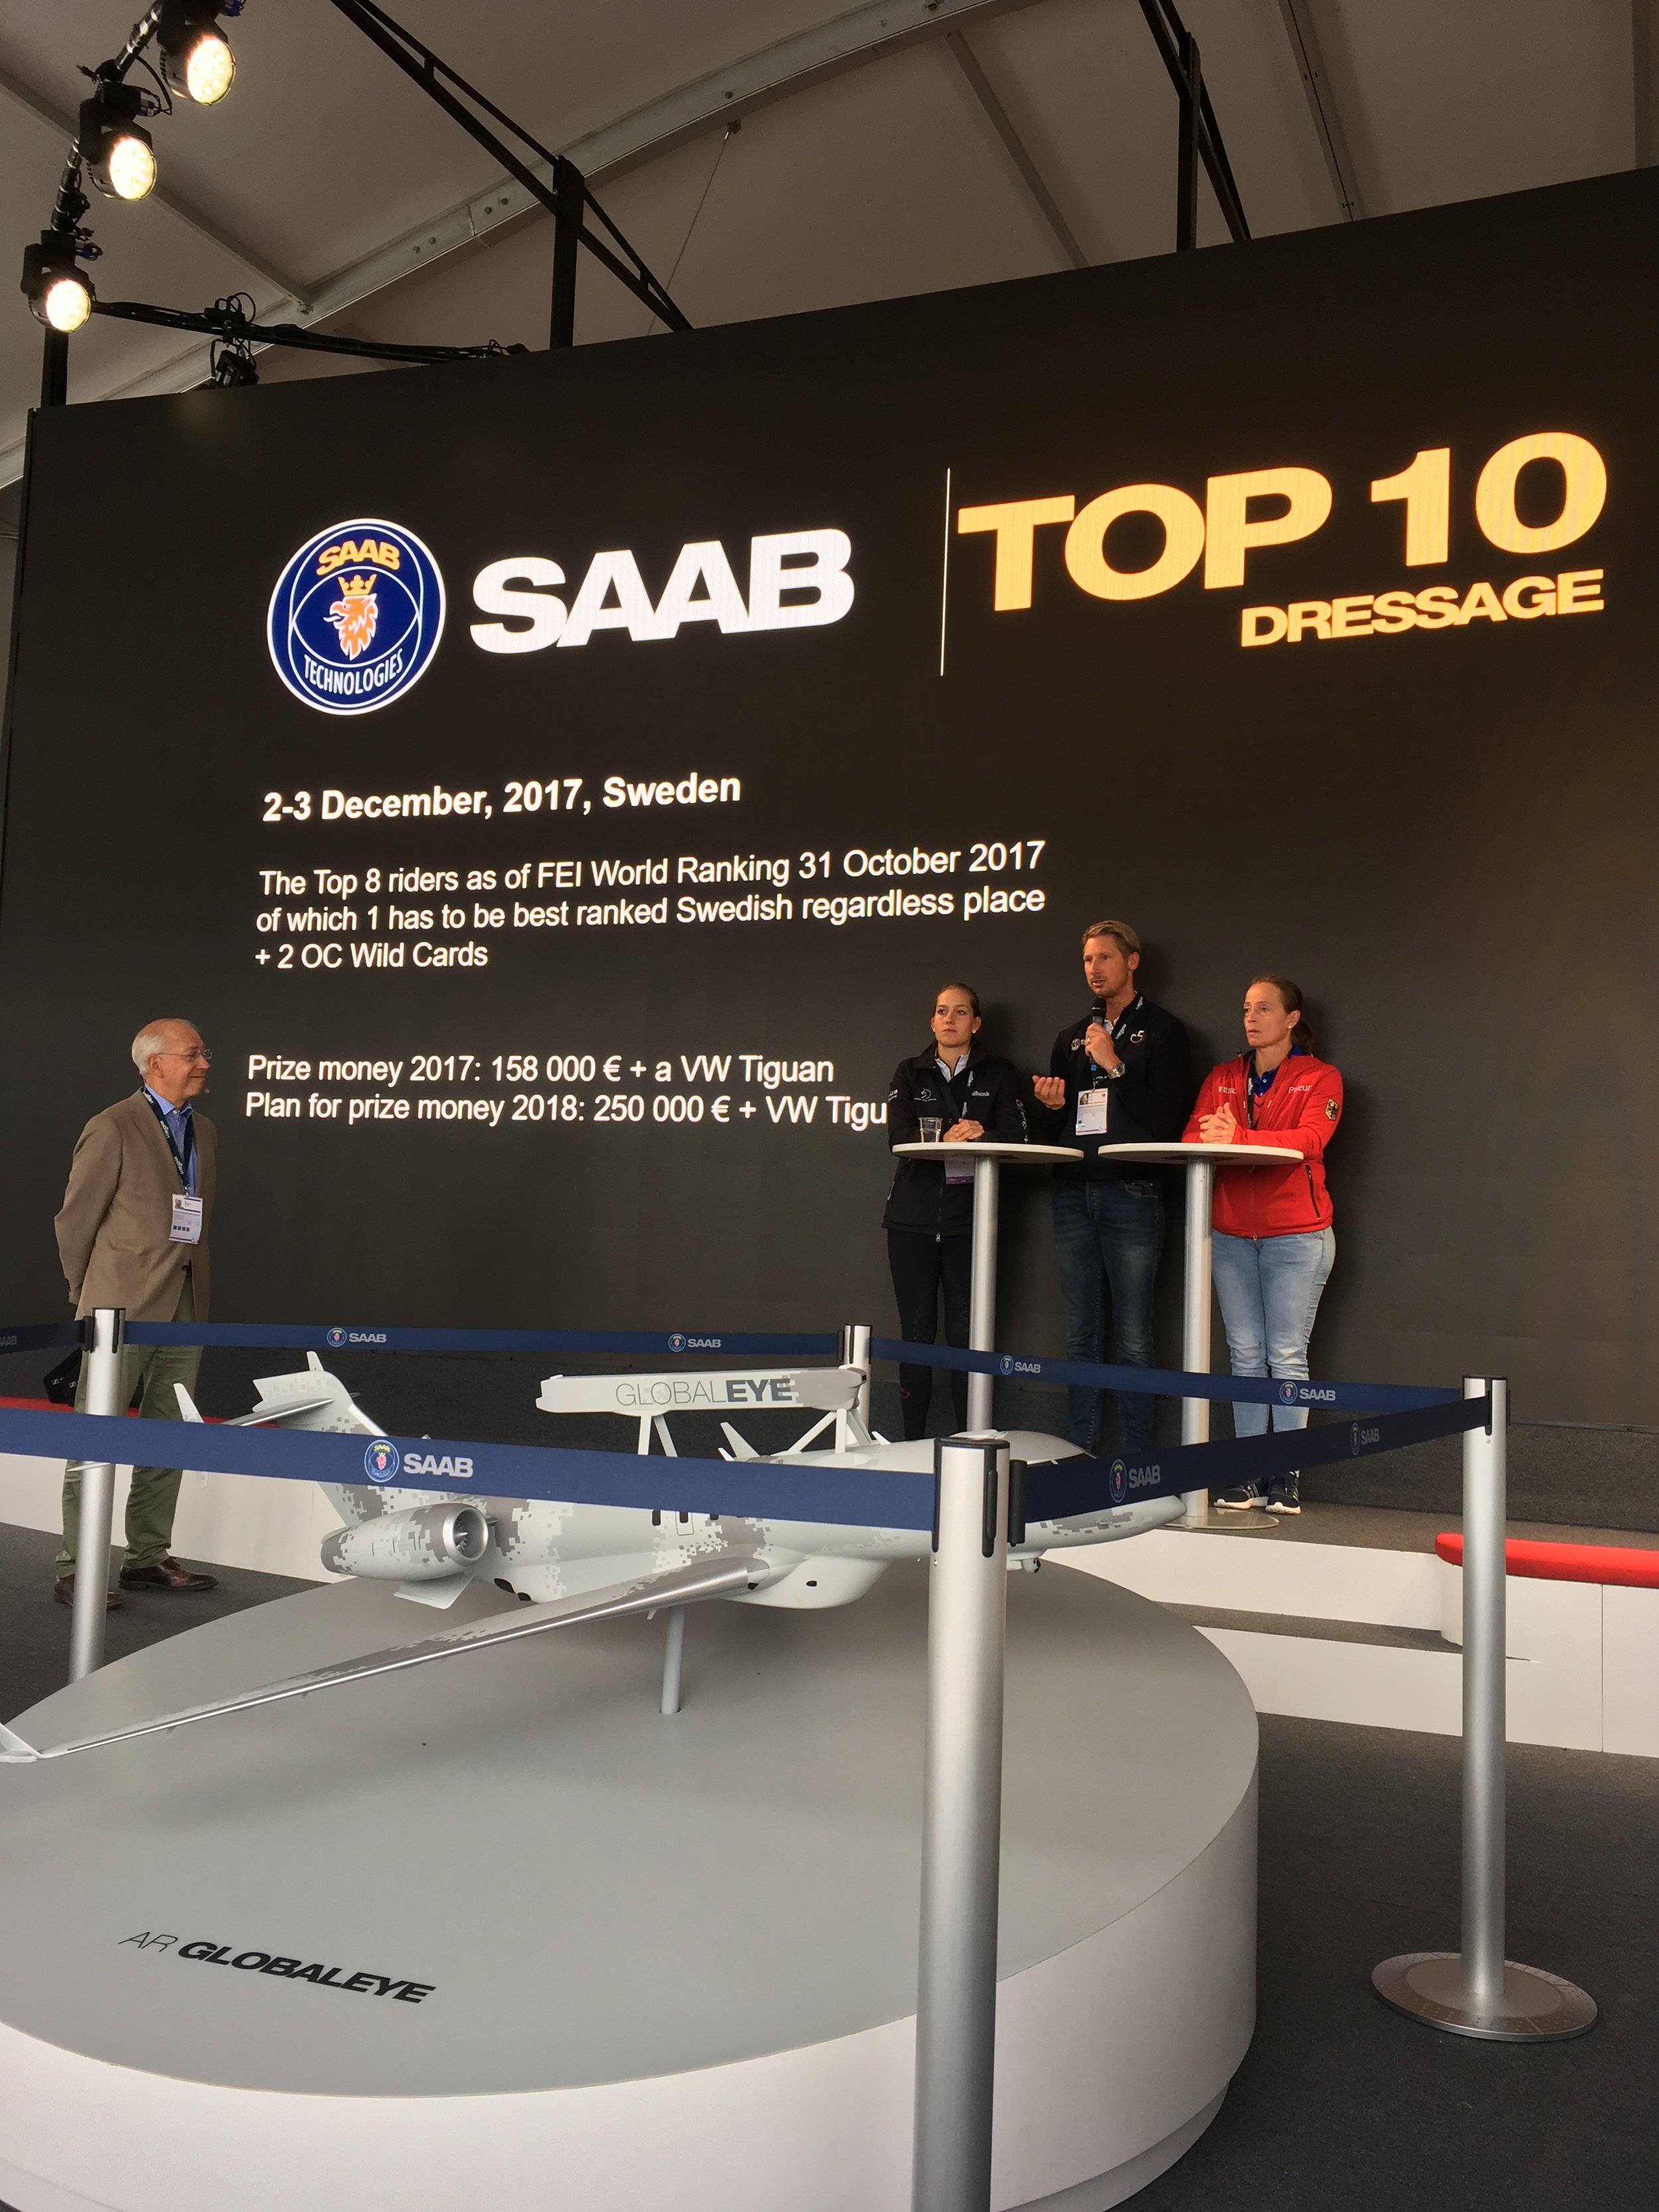 Presentation of SAAB Top 10 Dressage